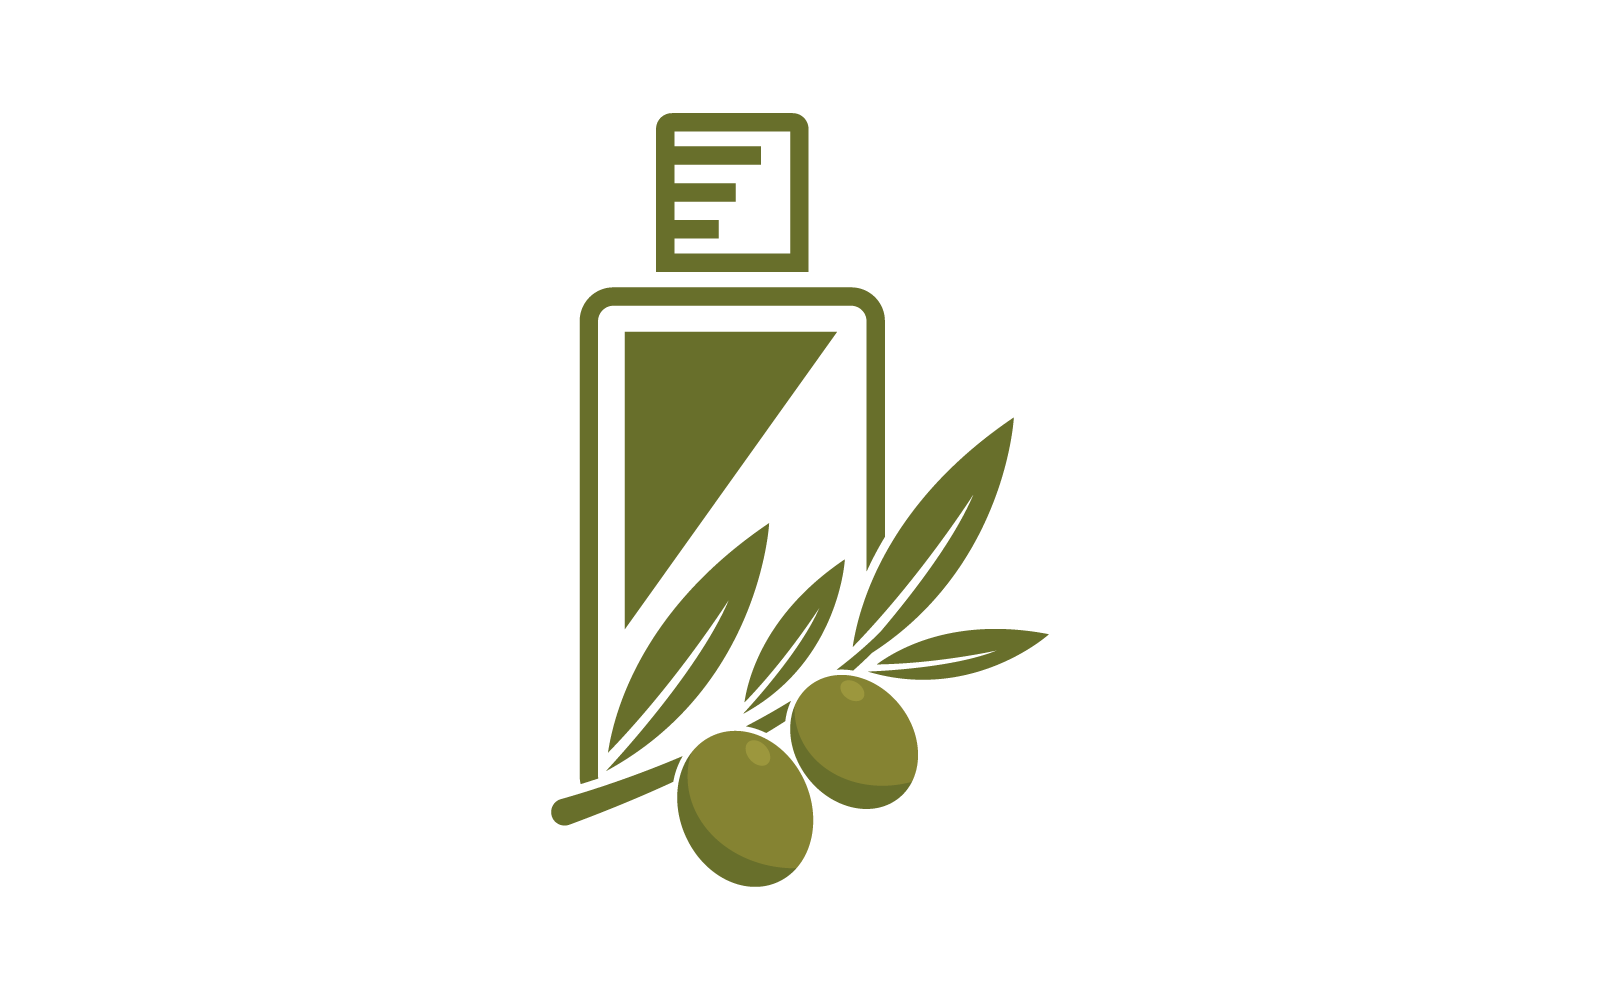 Olivový obrázek logo šablona vektor plochý design